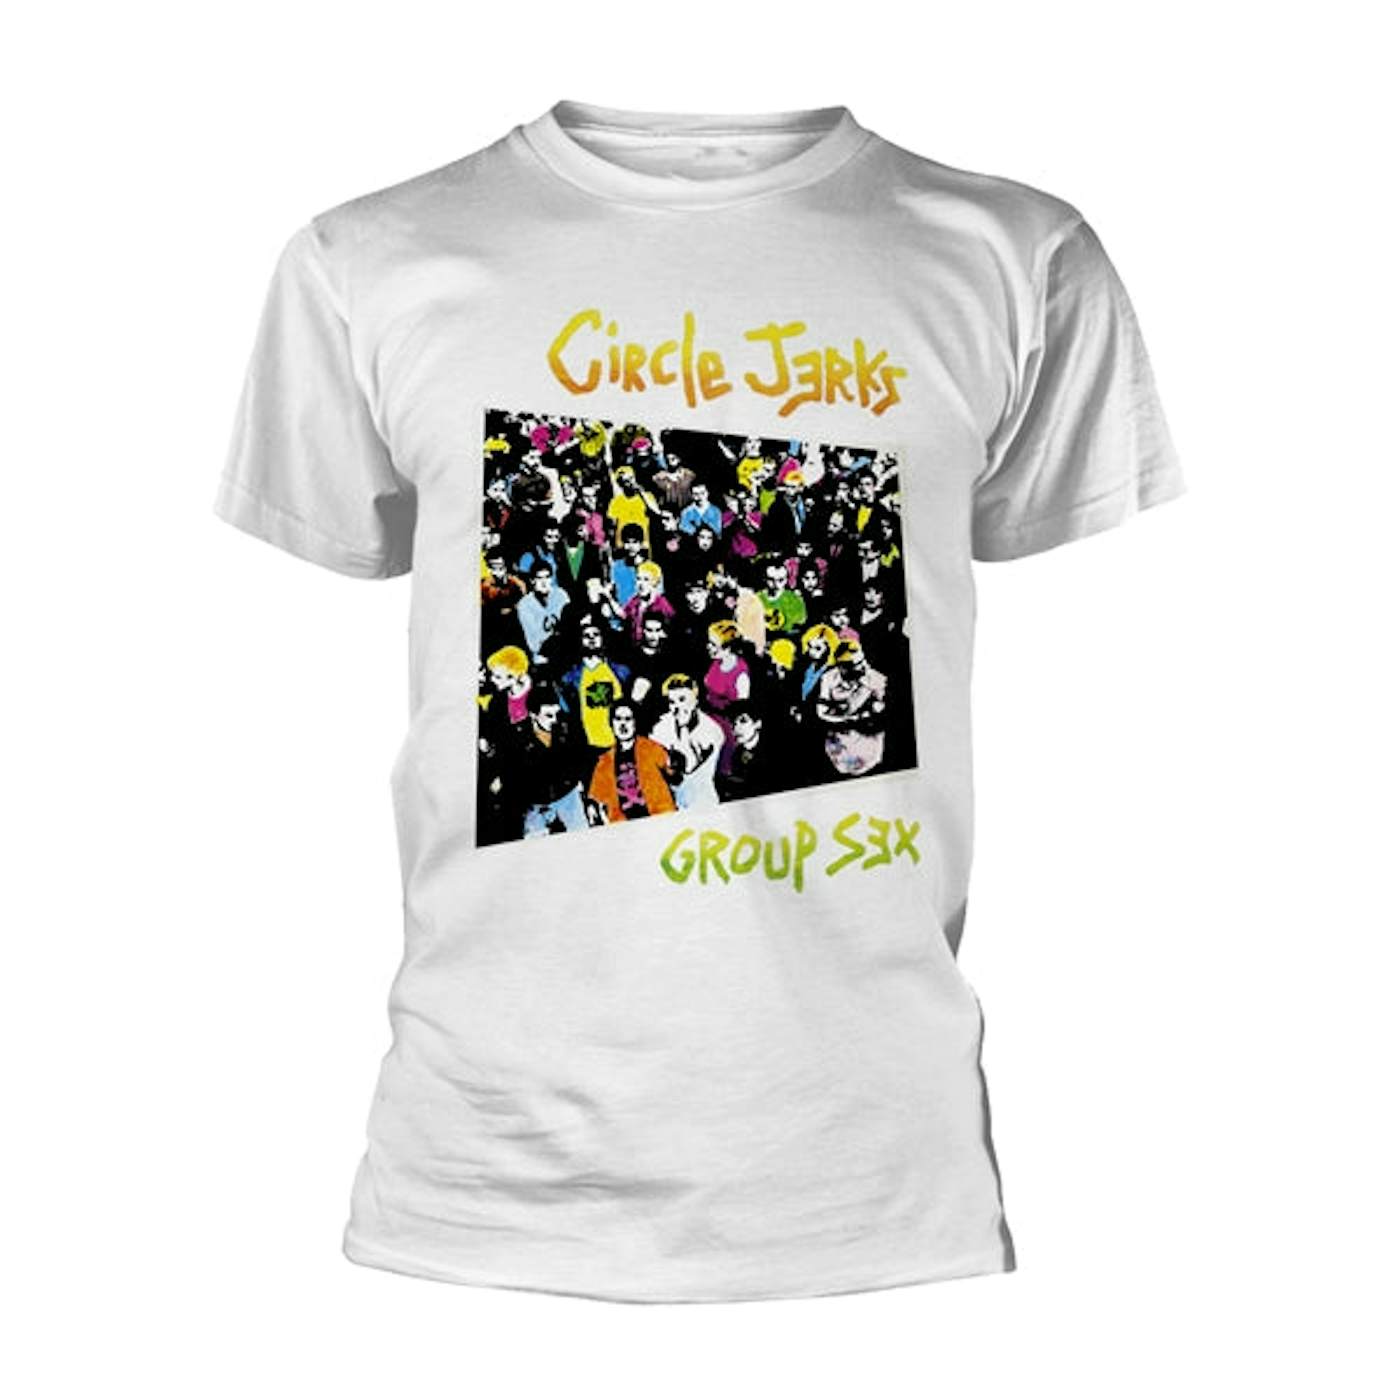 Circle Jerks T Shirt - Group Sex (White)